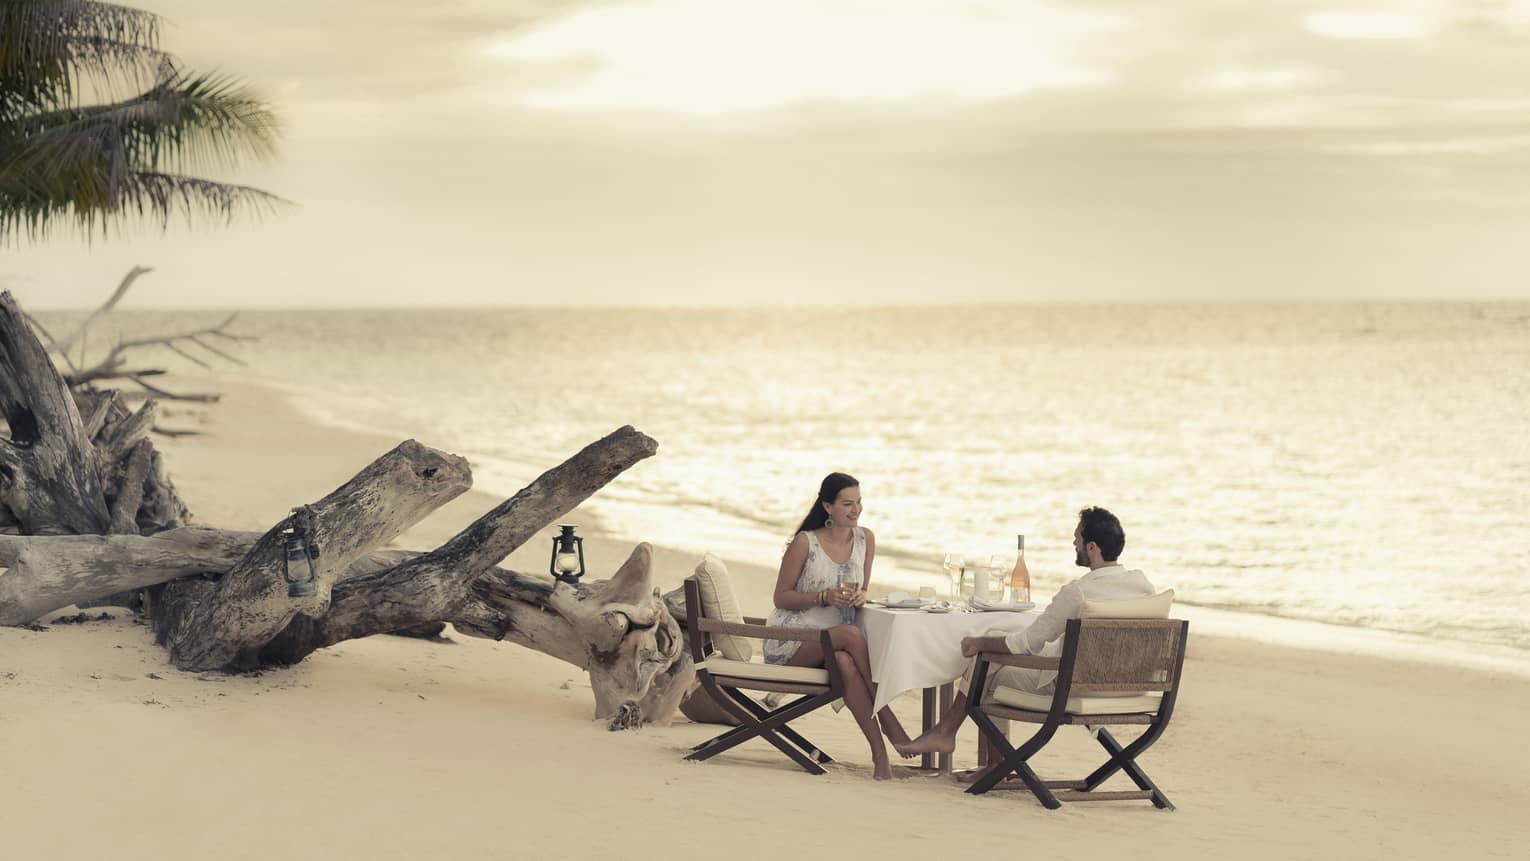 Couple enjoy romantic beach dinner by driftwood on sand beach at sunset